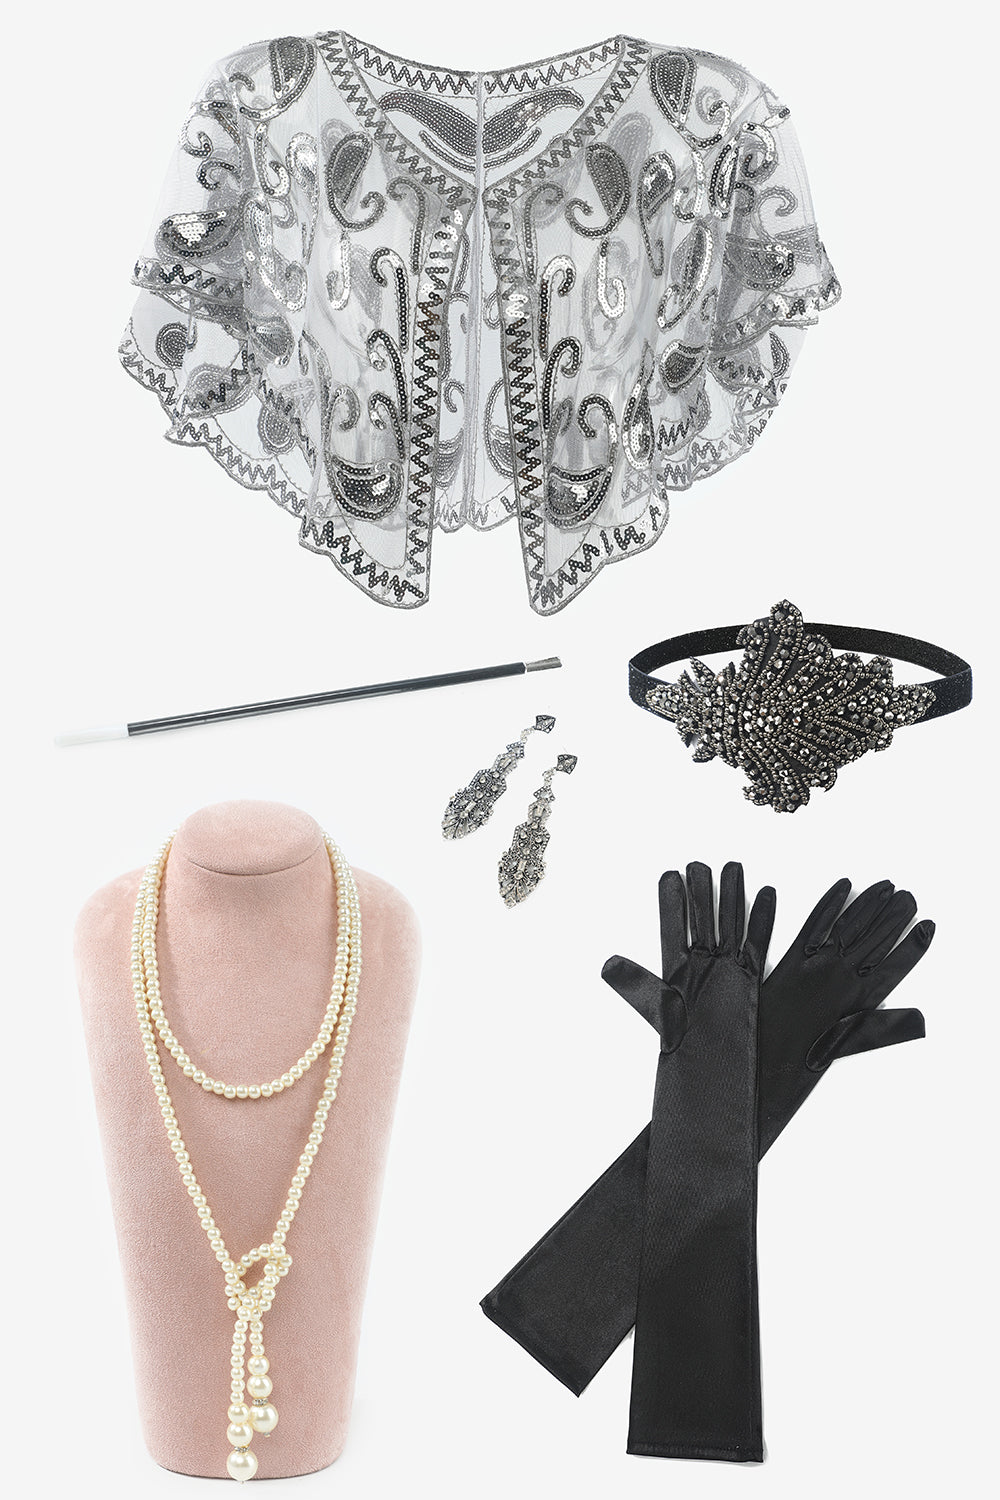 Seven Pieces Necklace Gloves 1920s Party Accessories Set